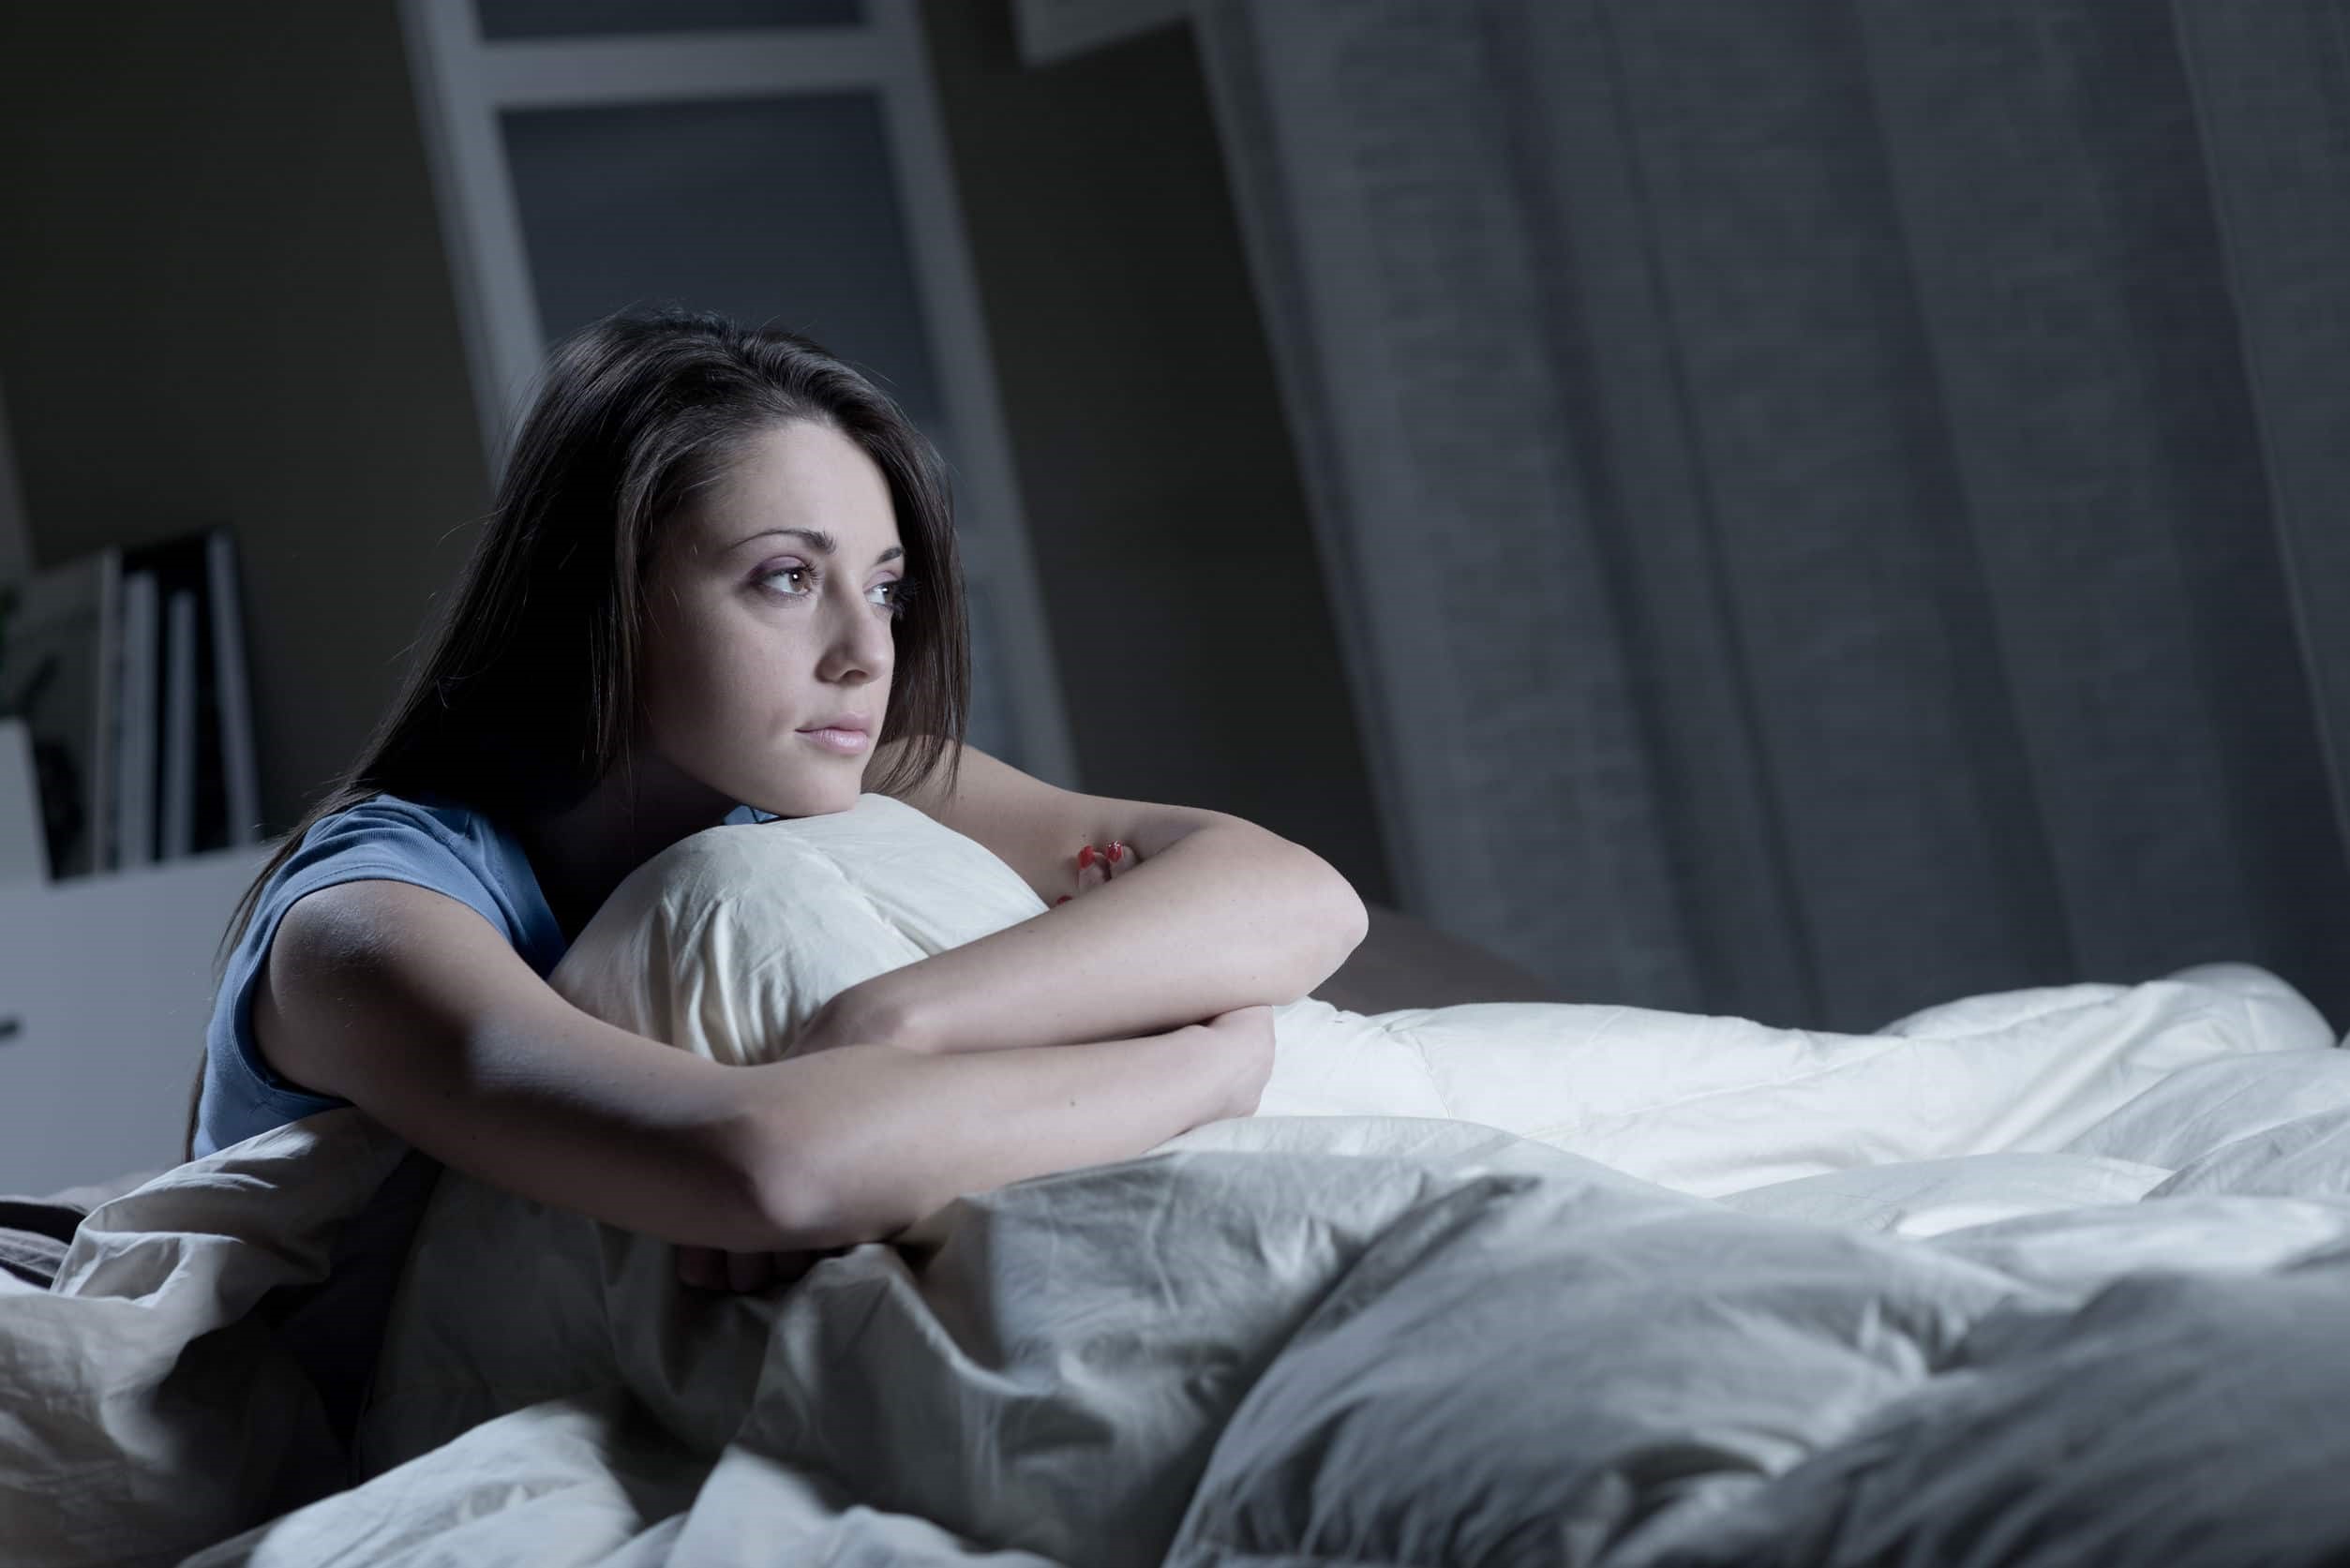 femeie care sta asezata pe pat noapte si priveste ingandurata